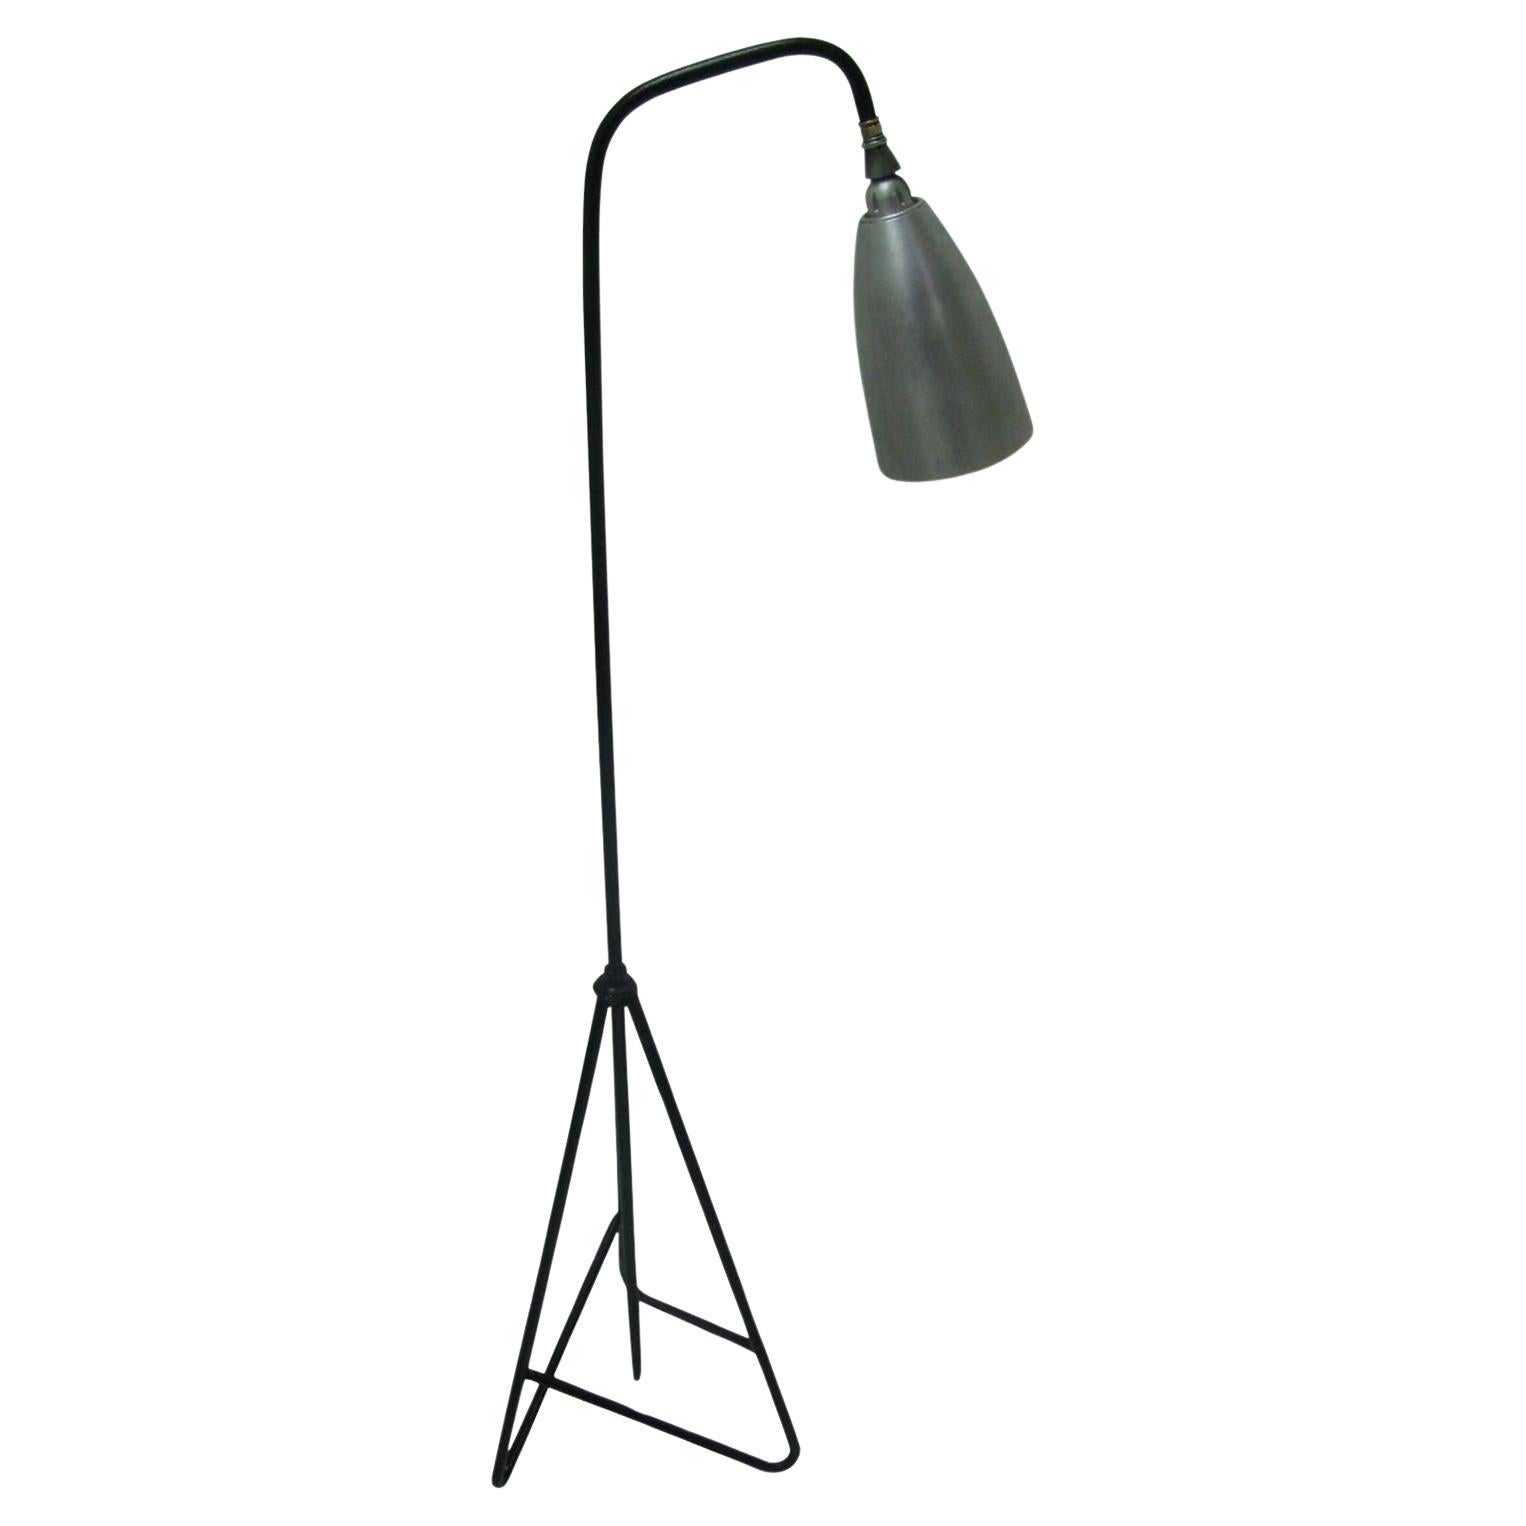 Mid-Century Modern Floor Lamp in the Style of Greta Grossman Grasshopper Lamp For Sale